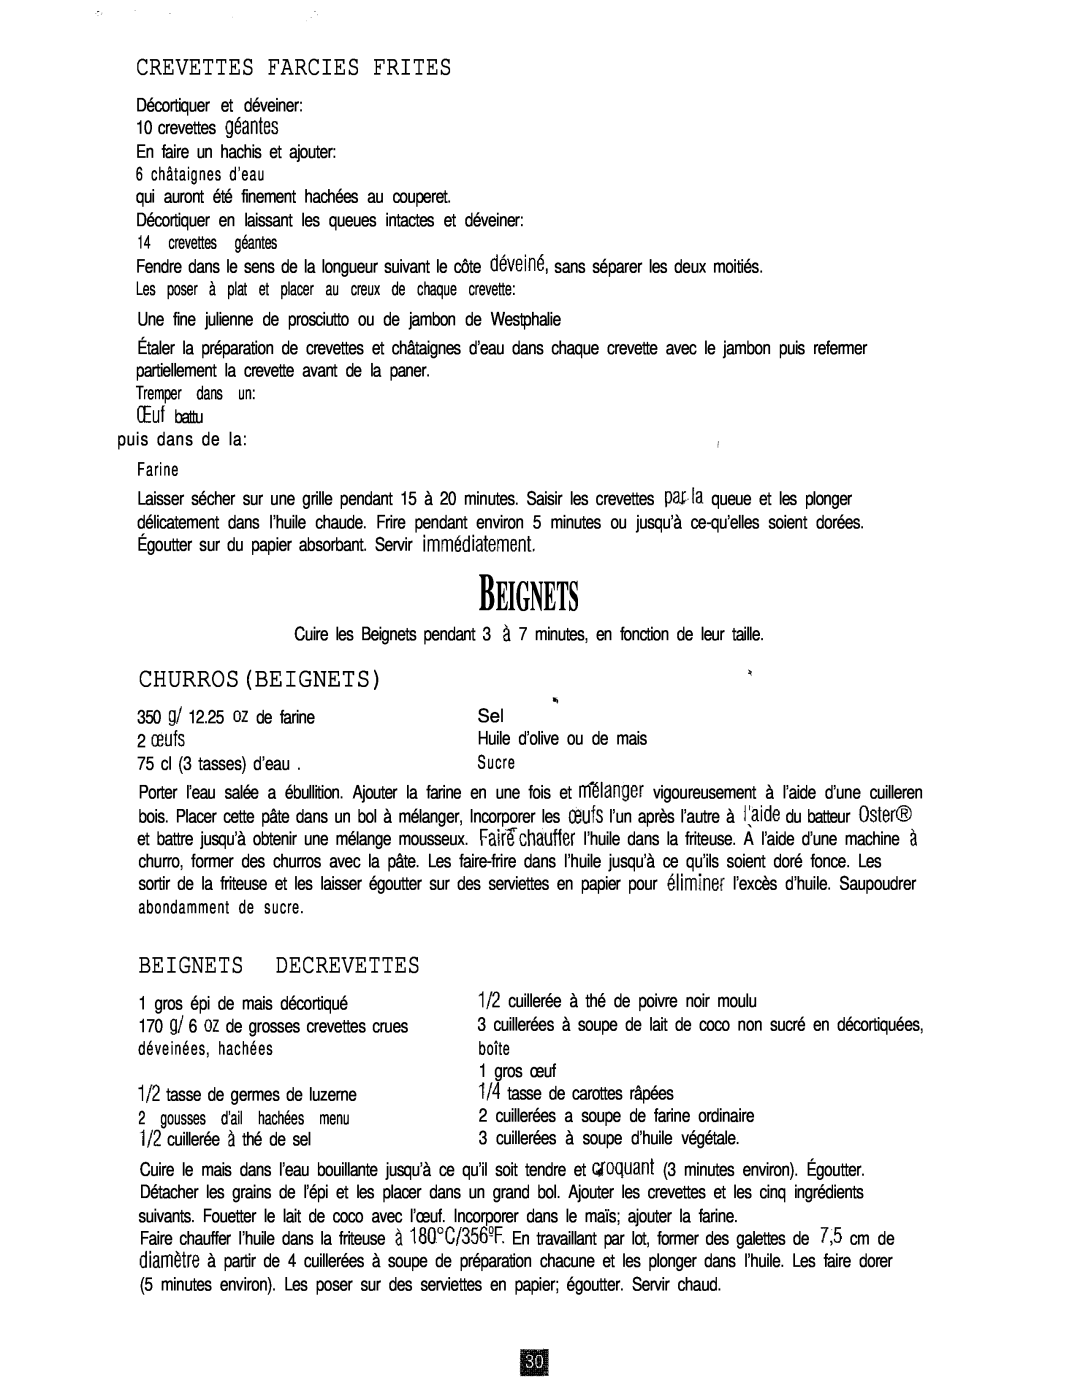 Oster 3246 manual Crevettes Farcies Frites, Churrosbeignets, Beignets Decrevettes 